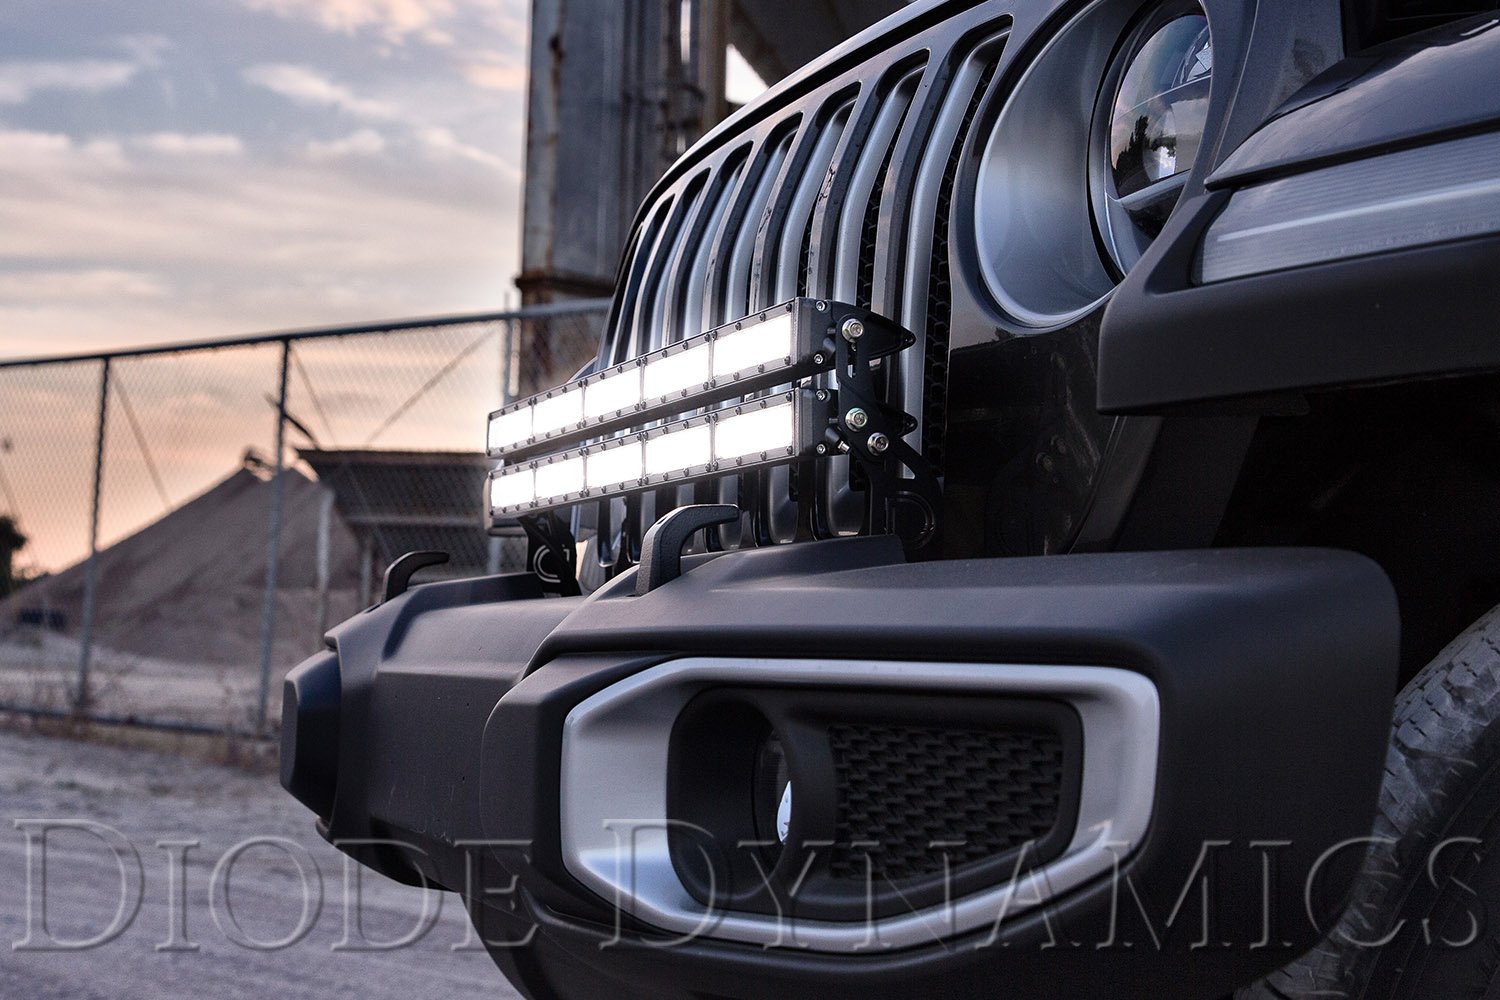 SS30 Single Bumper Lightbar Kit for 2018-2023 Jeep JL Wrangler/Gladiator Diode Dynamics-